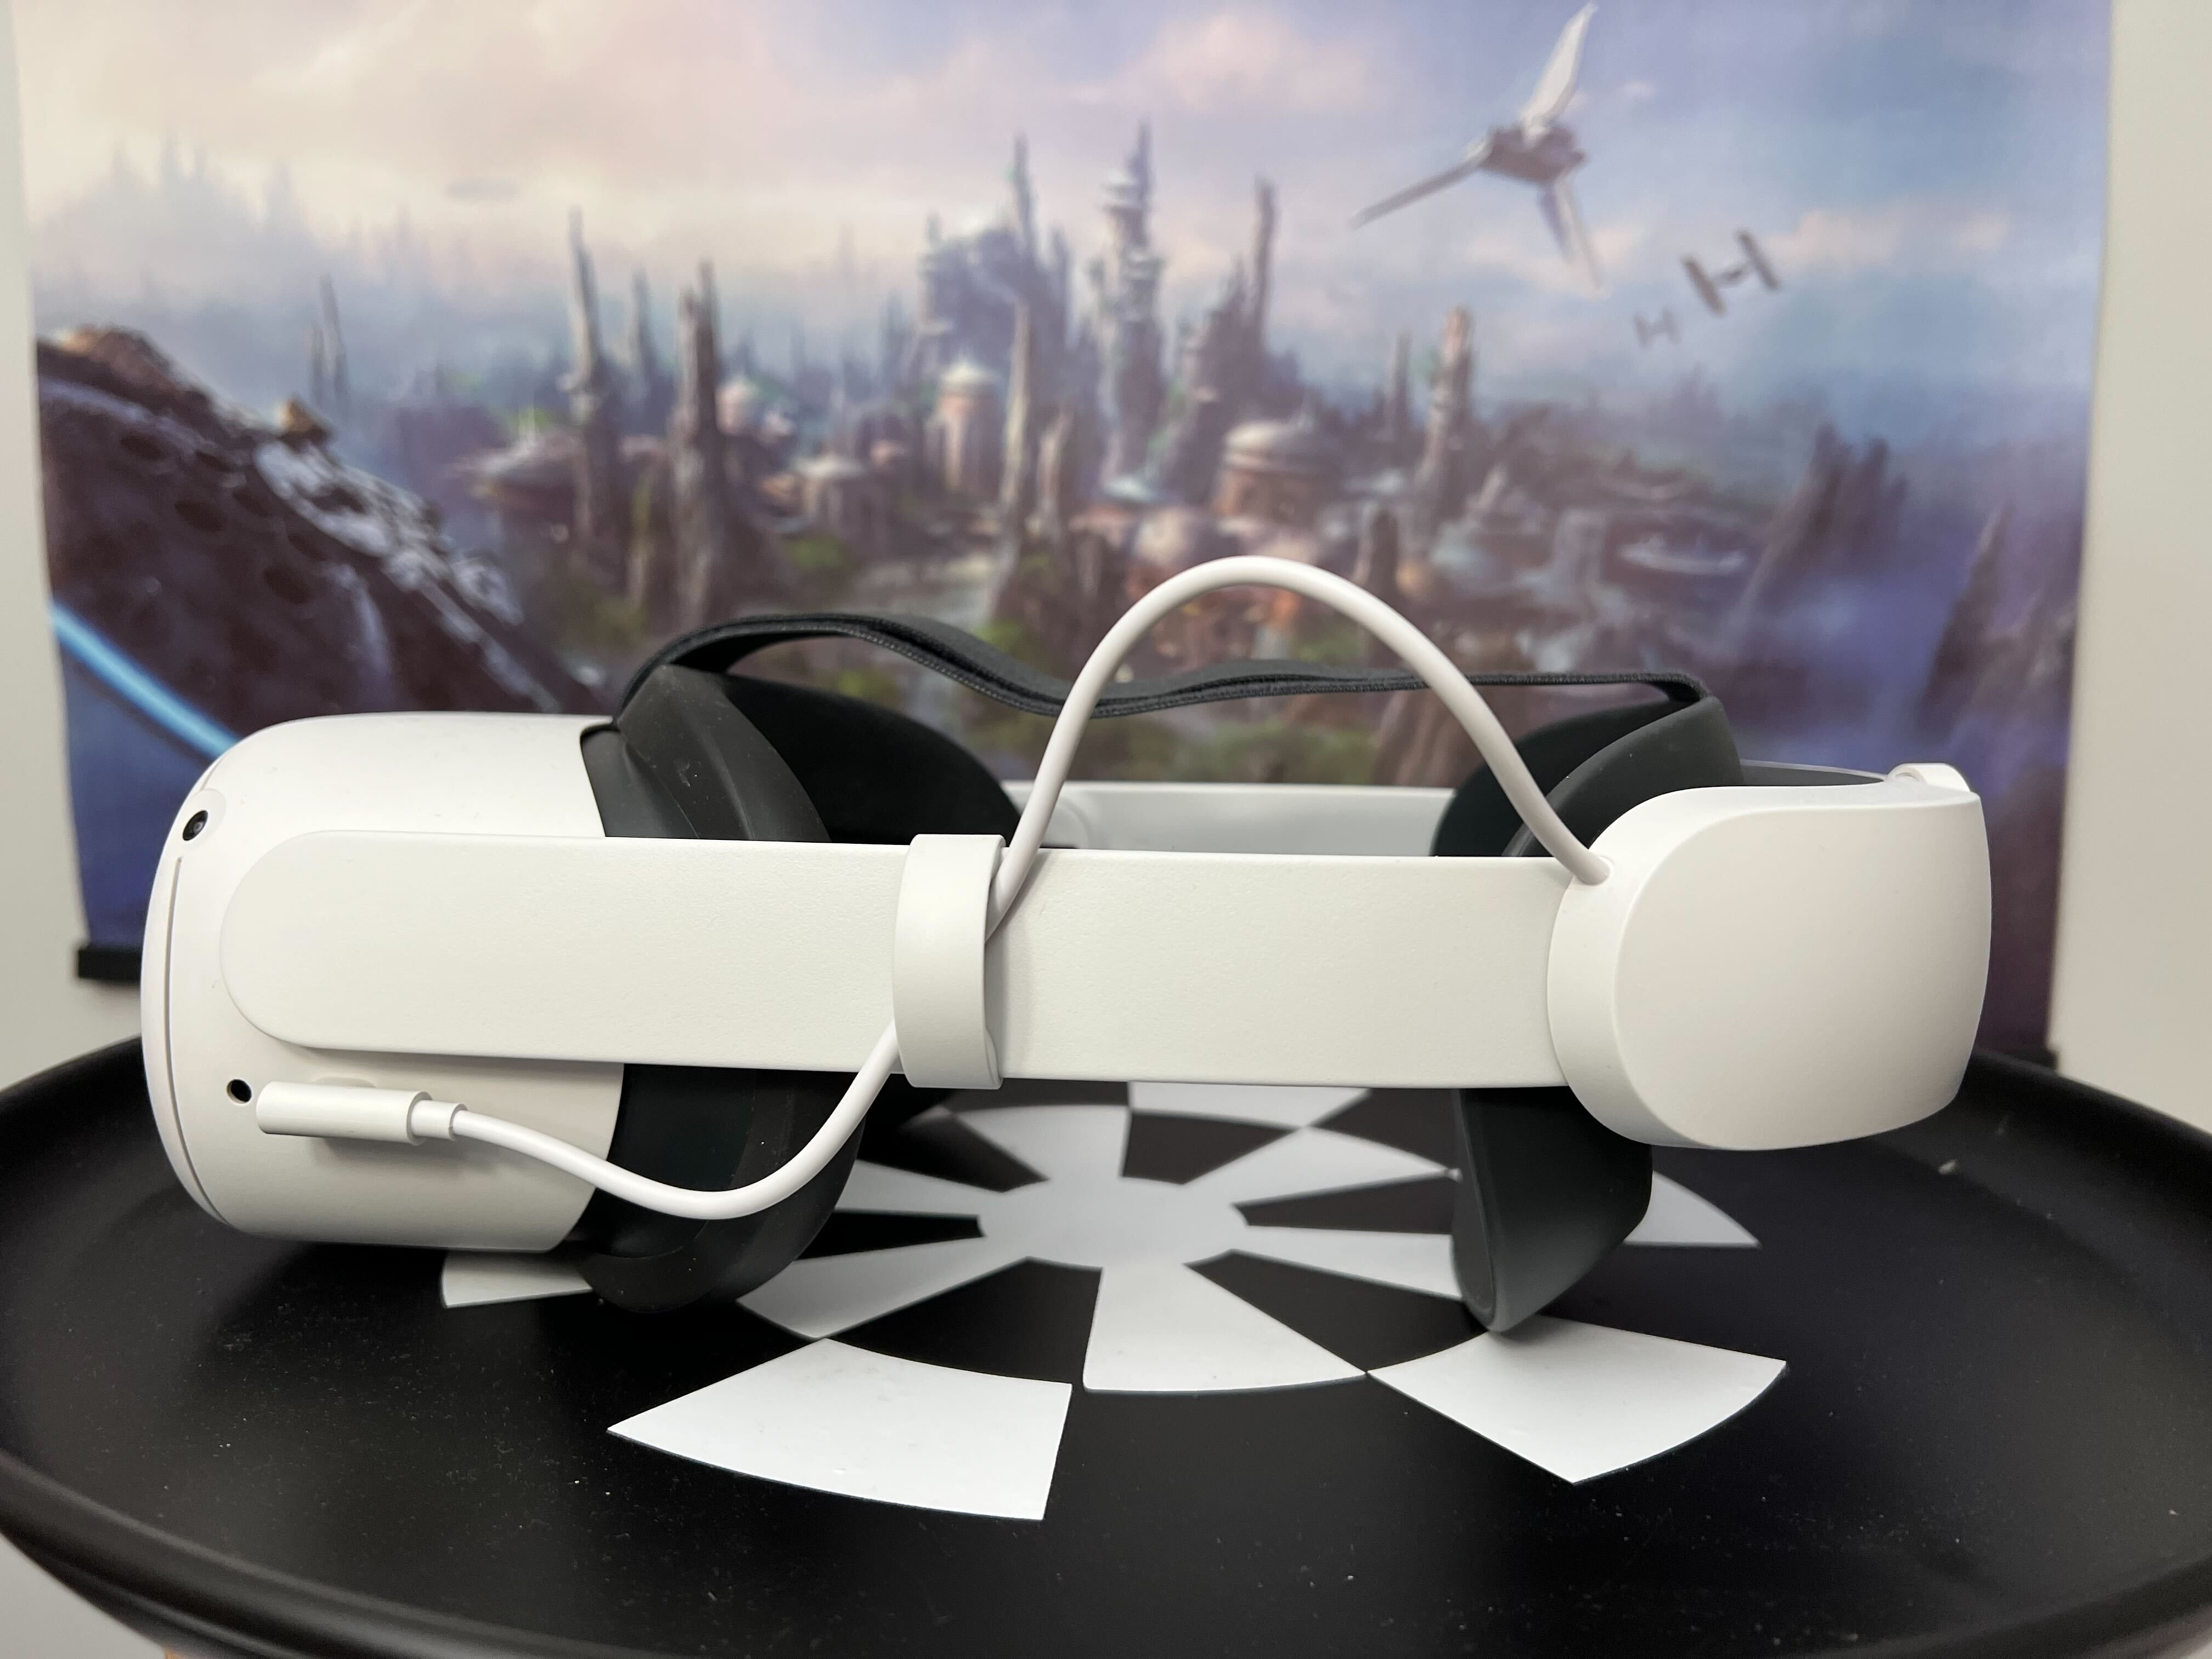 KIWI Design Oculus Quest Head Strap Review - Oculus Quest Play